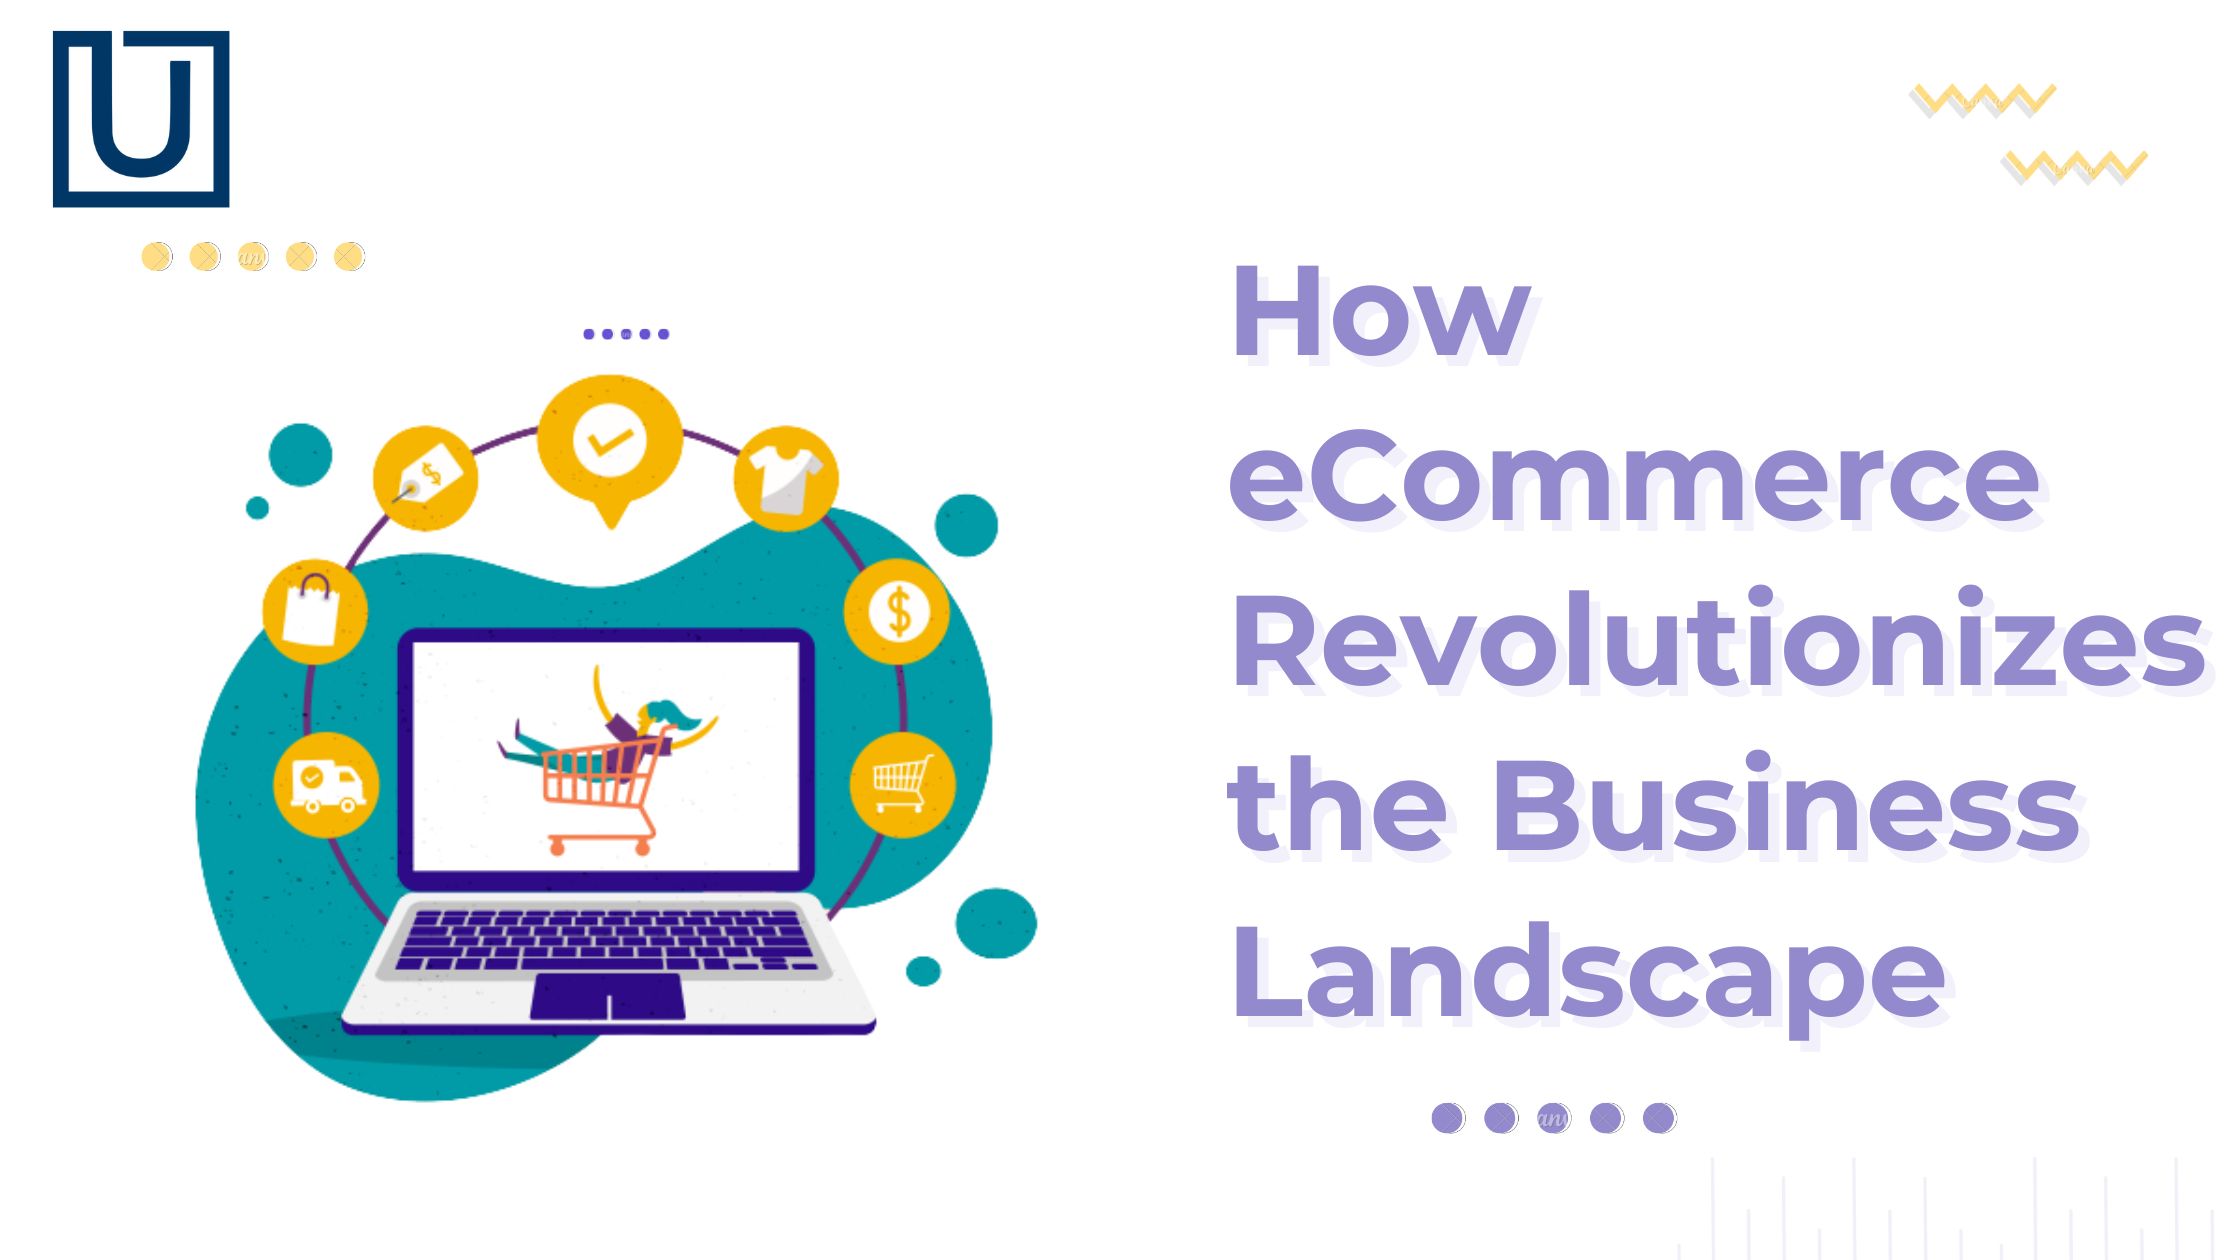 How eCommerce Revolutionizes the Business Landscape